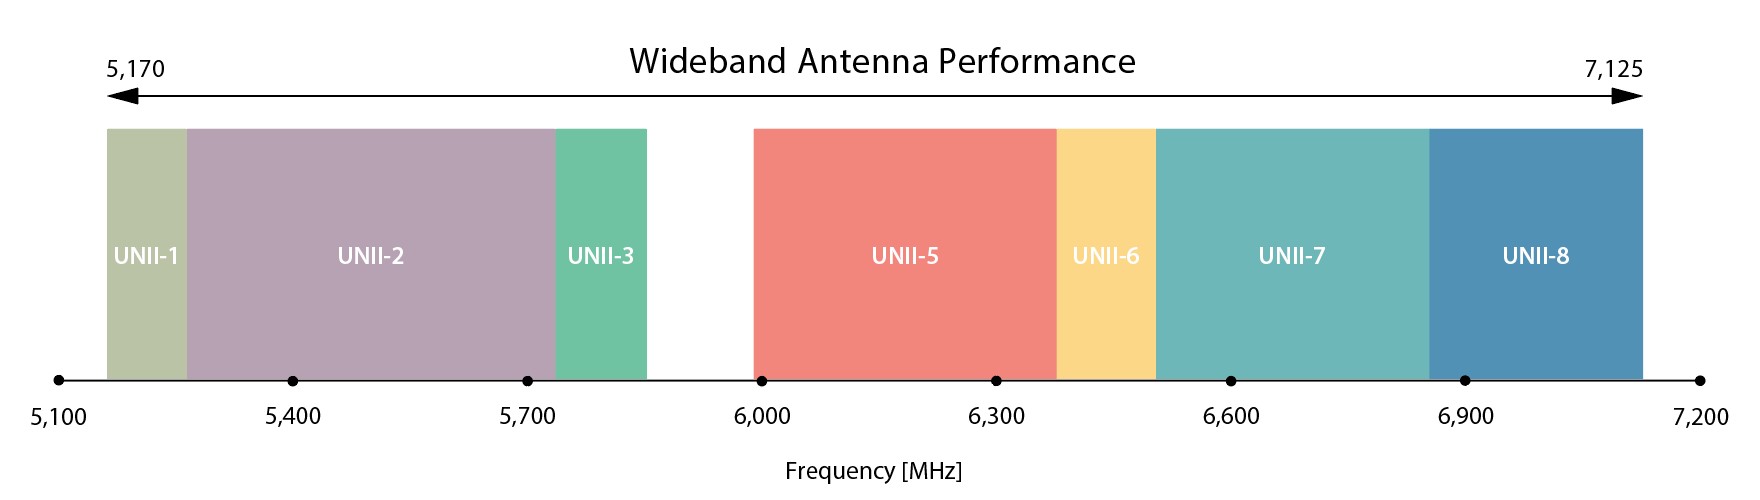 Wideband performance